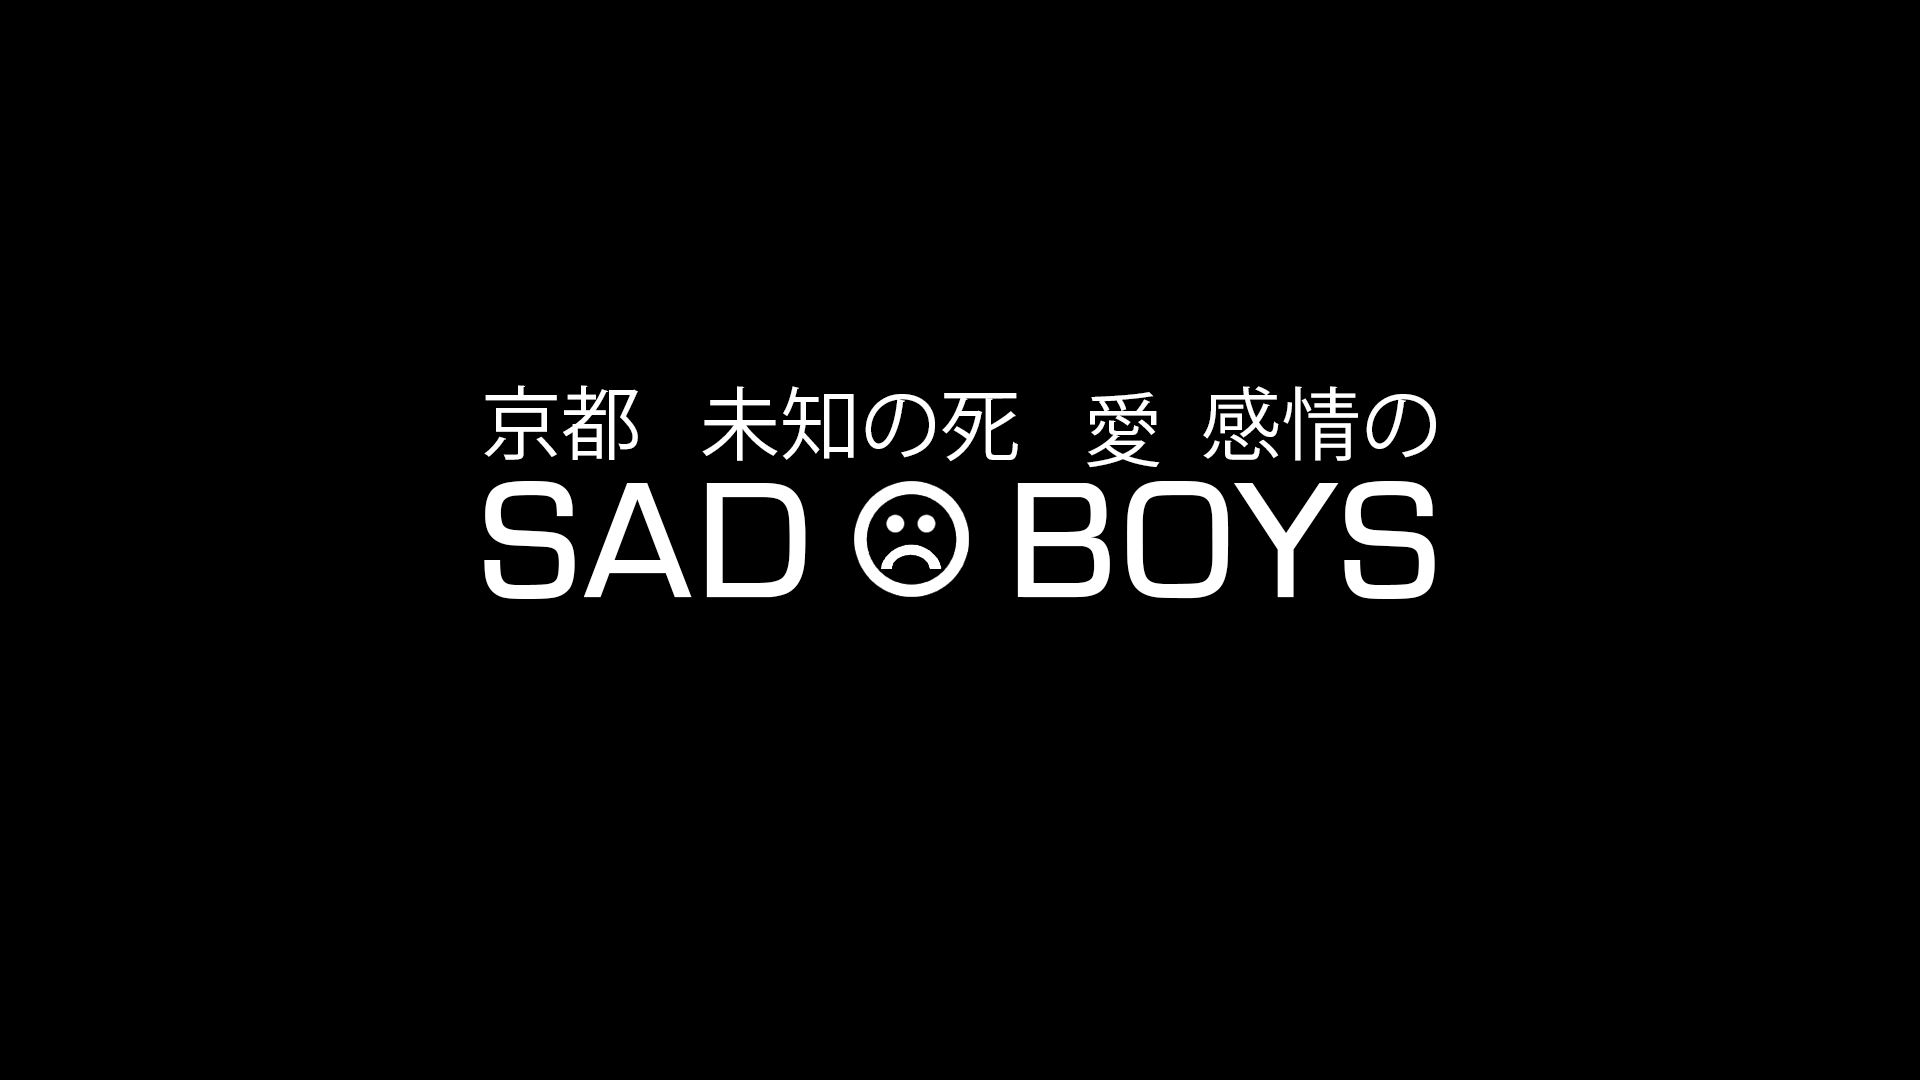 Sad Boys Entertanment 